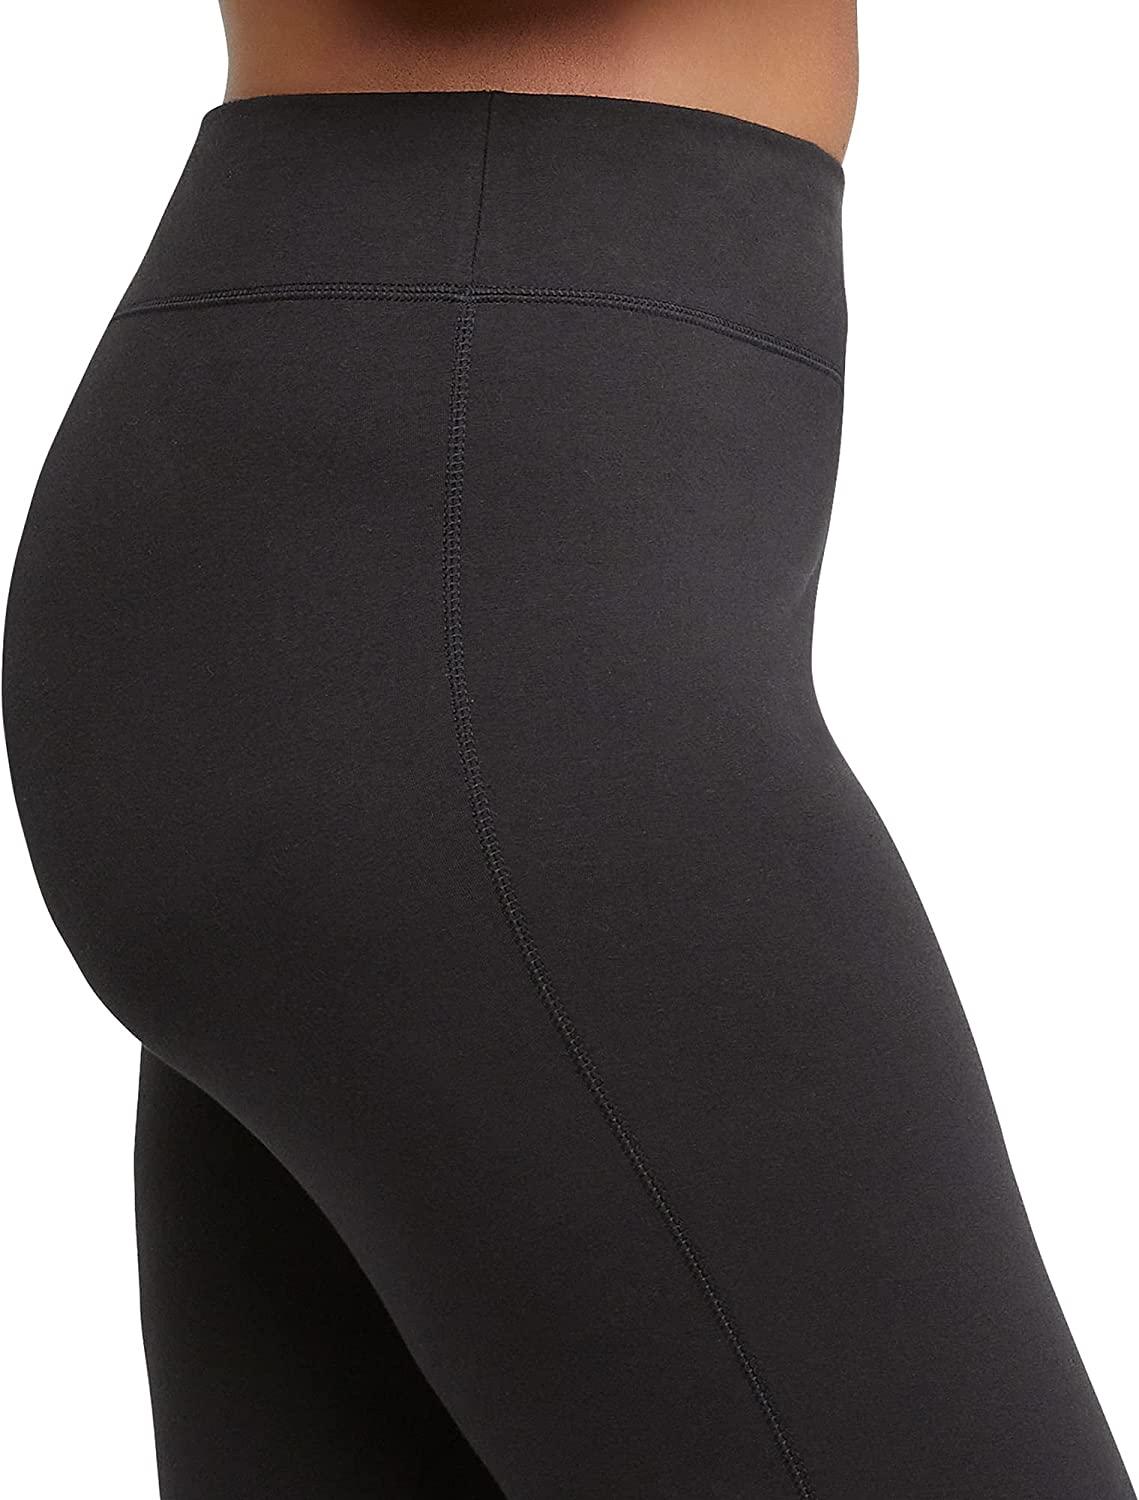 Black Stretchy Leggings - Women's 2X Plus Size